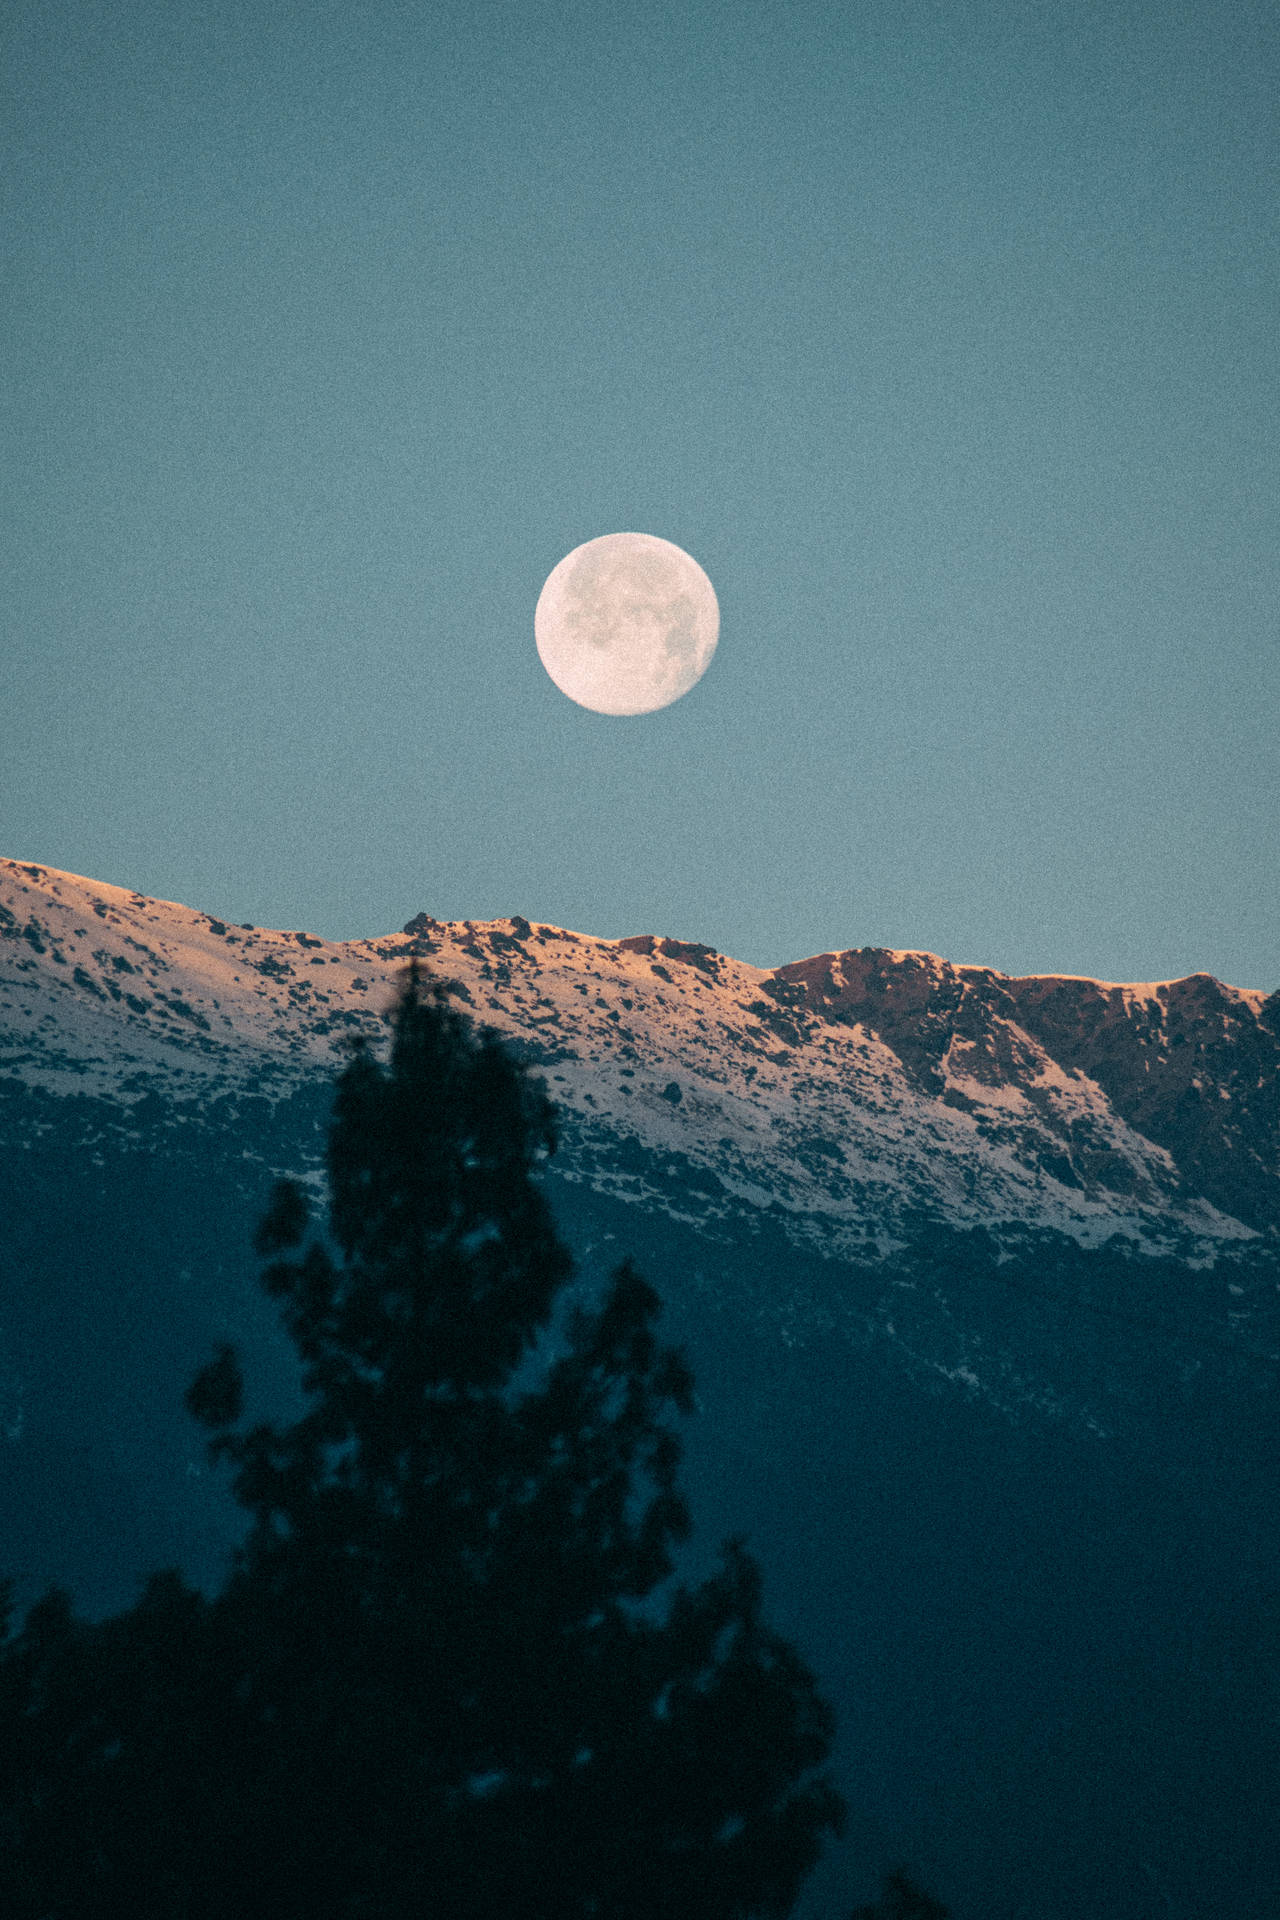 Mountain Tree And Beautiful Full Moon